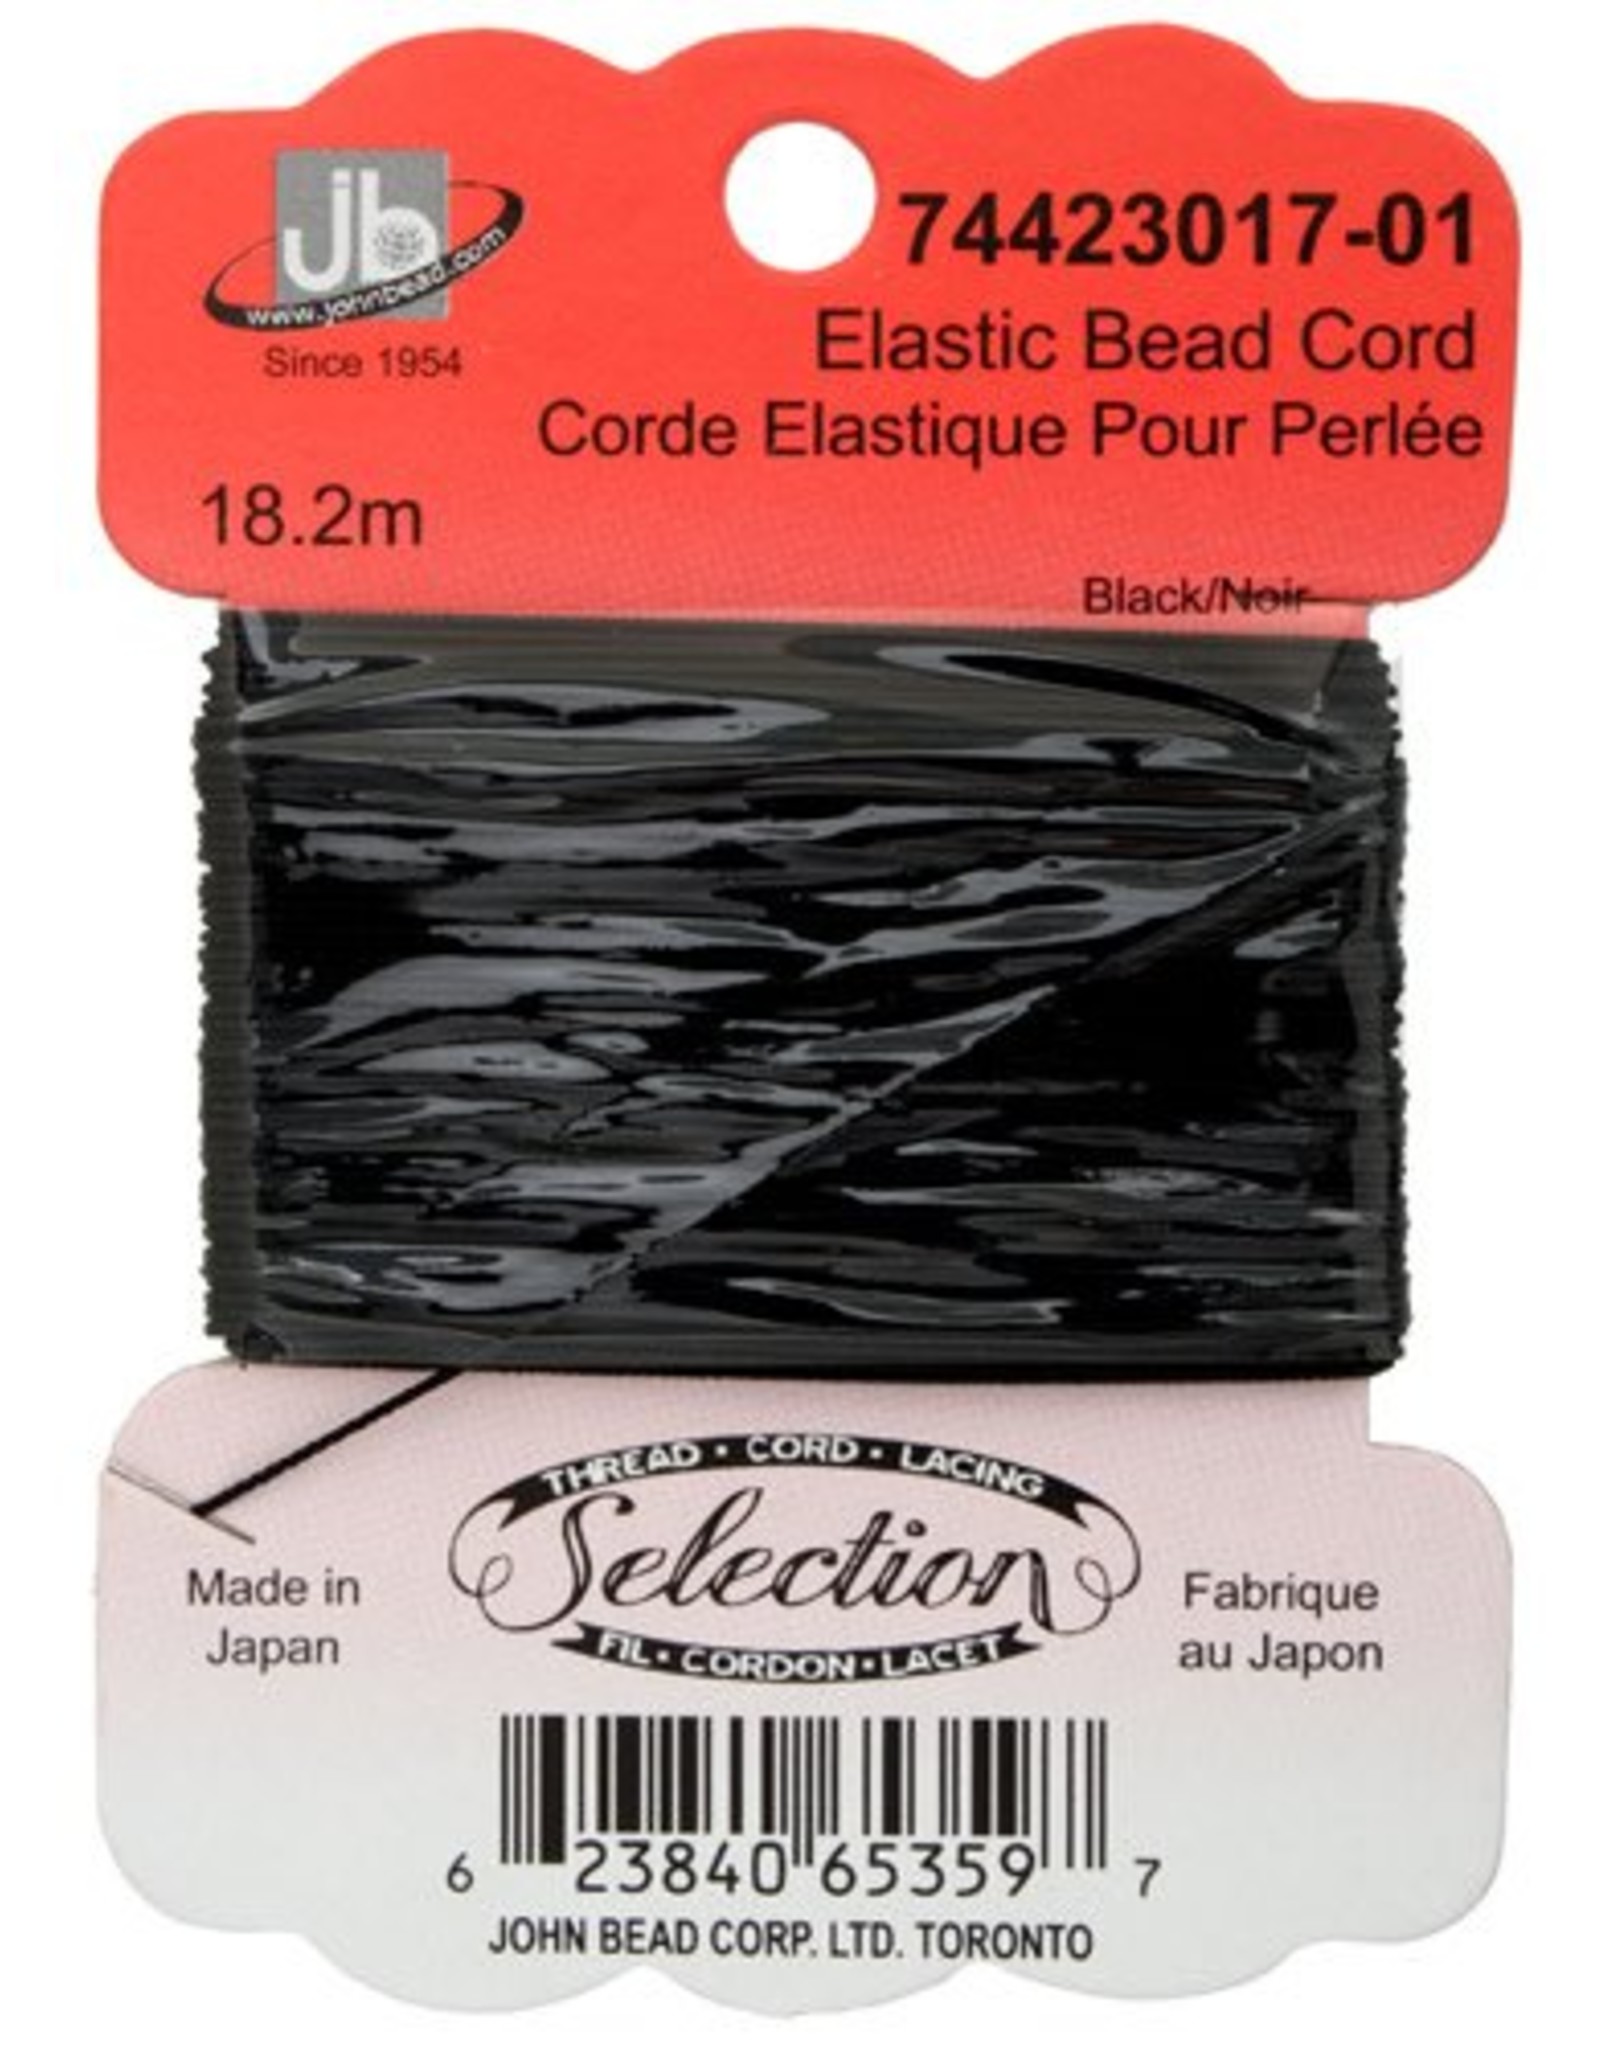 elastic bead cord